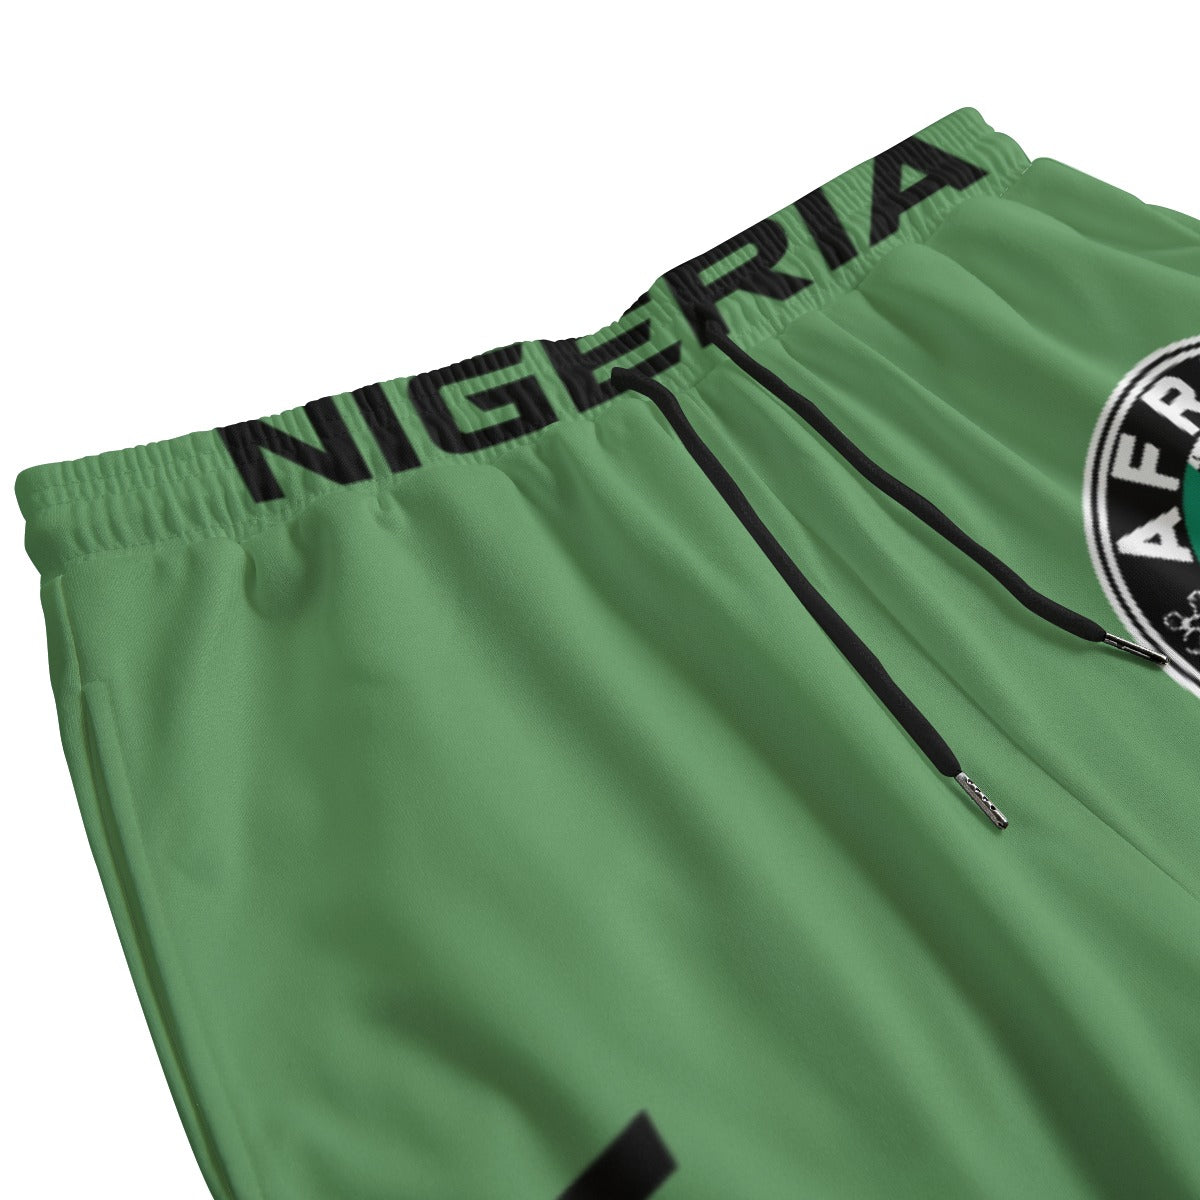 Africa Top Team Nigeria Drab Green Men's Sweatpants